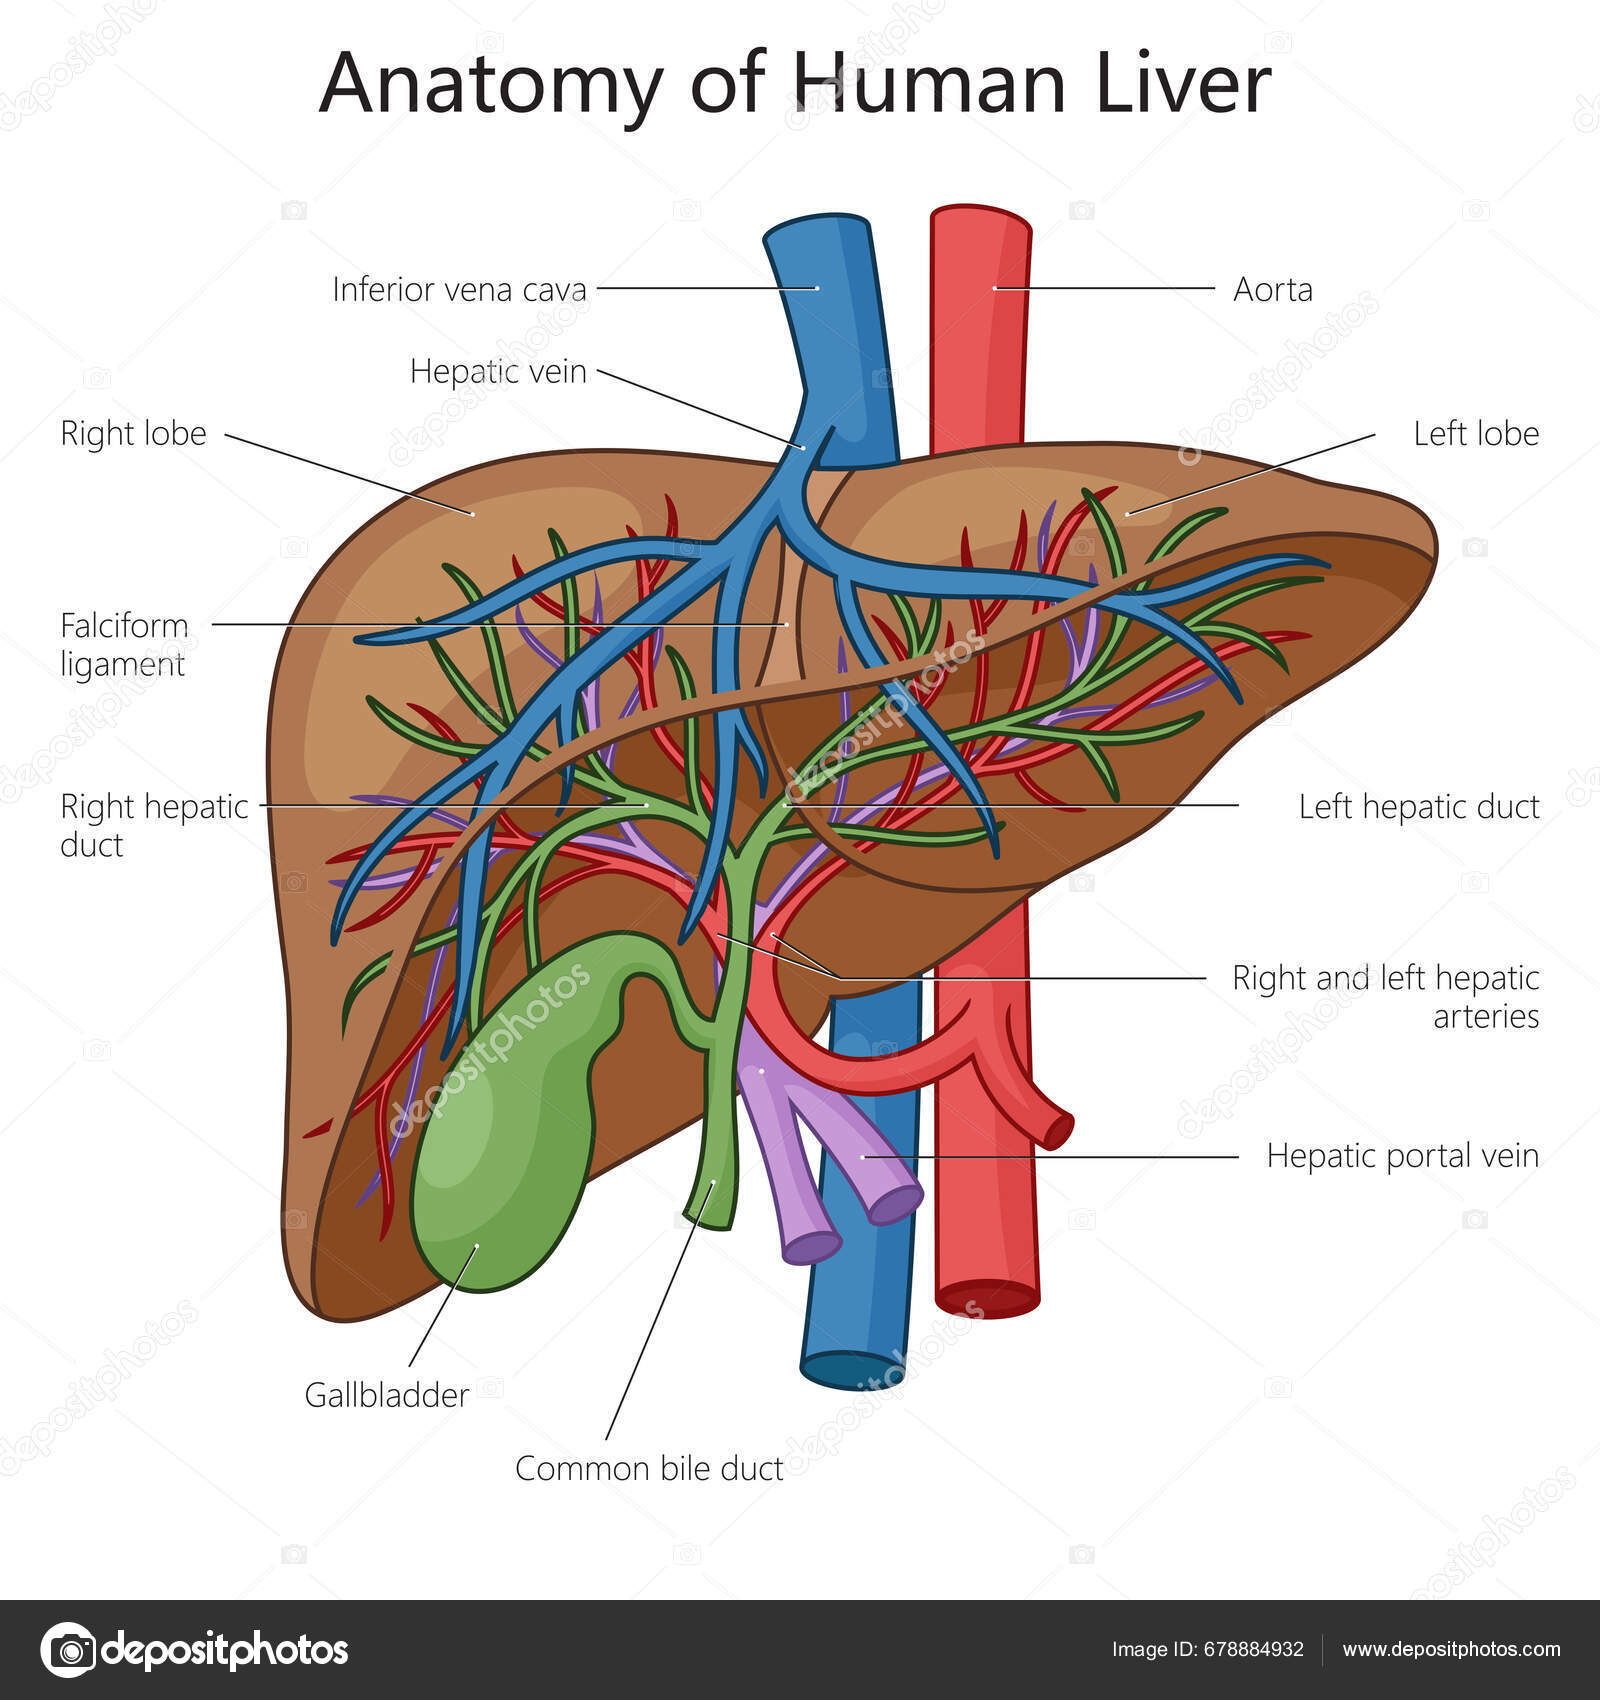 Liver Disease Stages: Causes, Symptoms, Diagnosis, Treatment